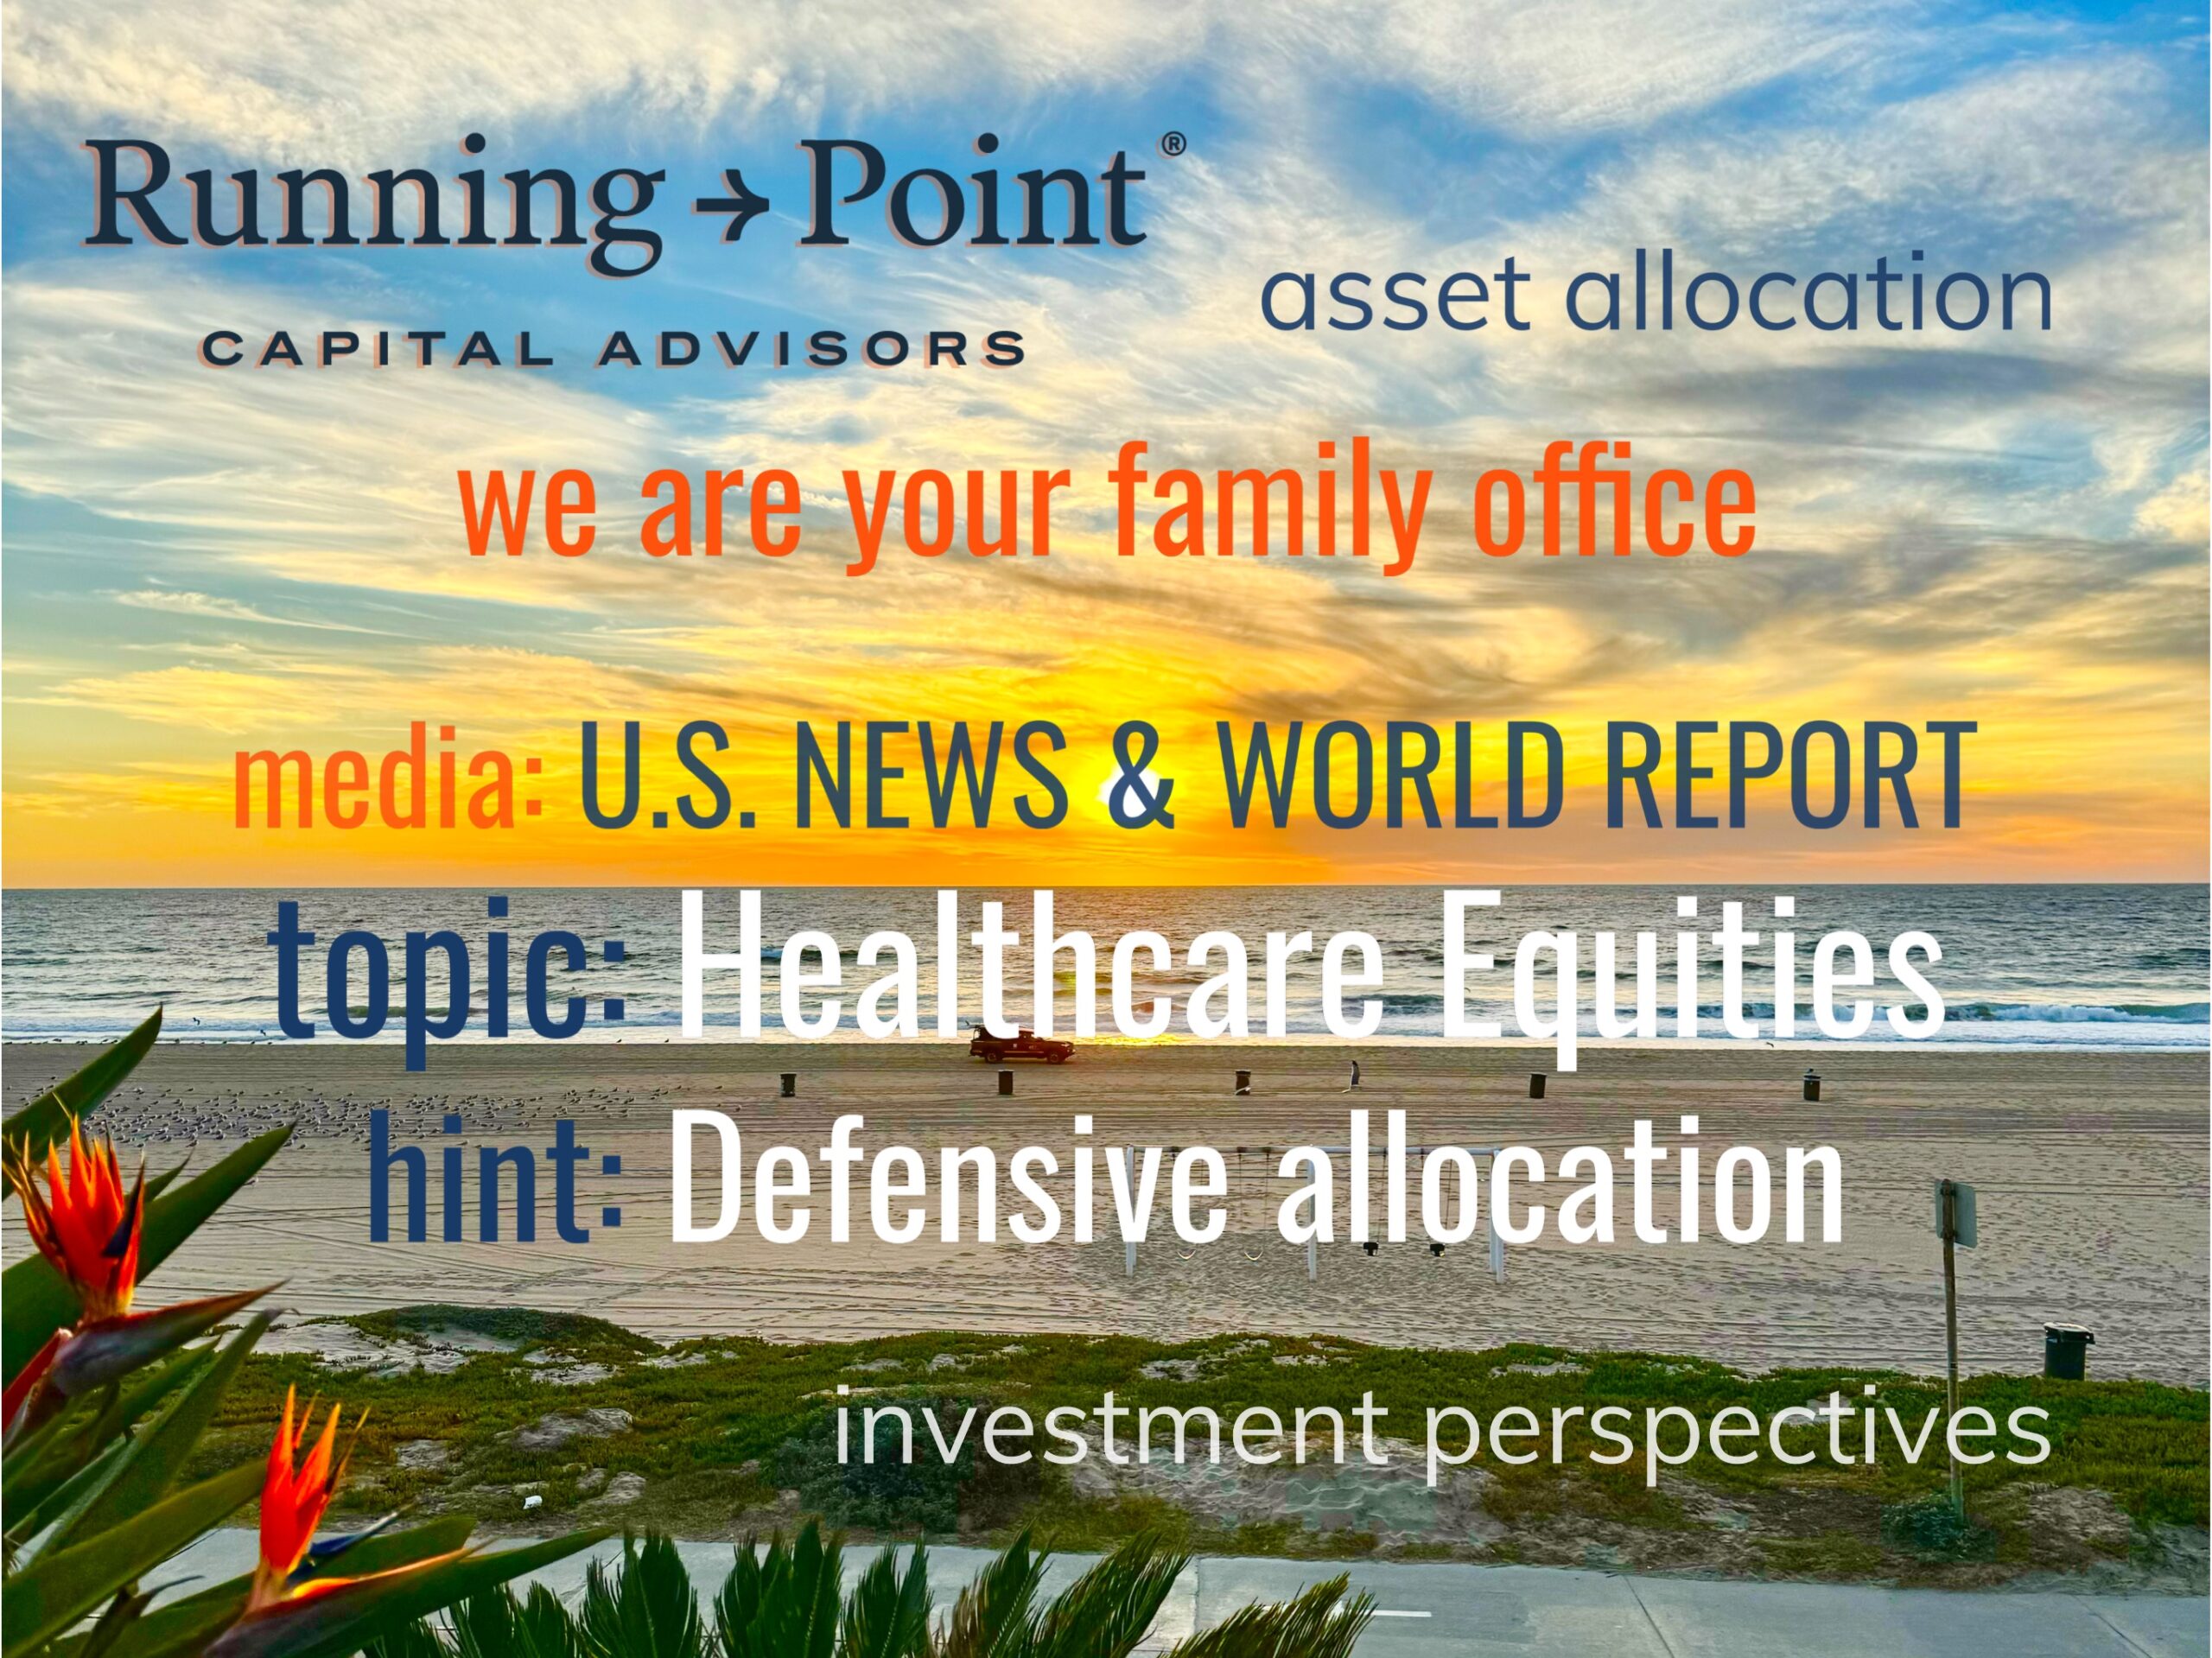 U.S. News & World Report: Healthcare Stocks and ETFs